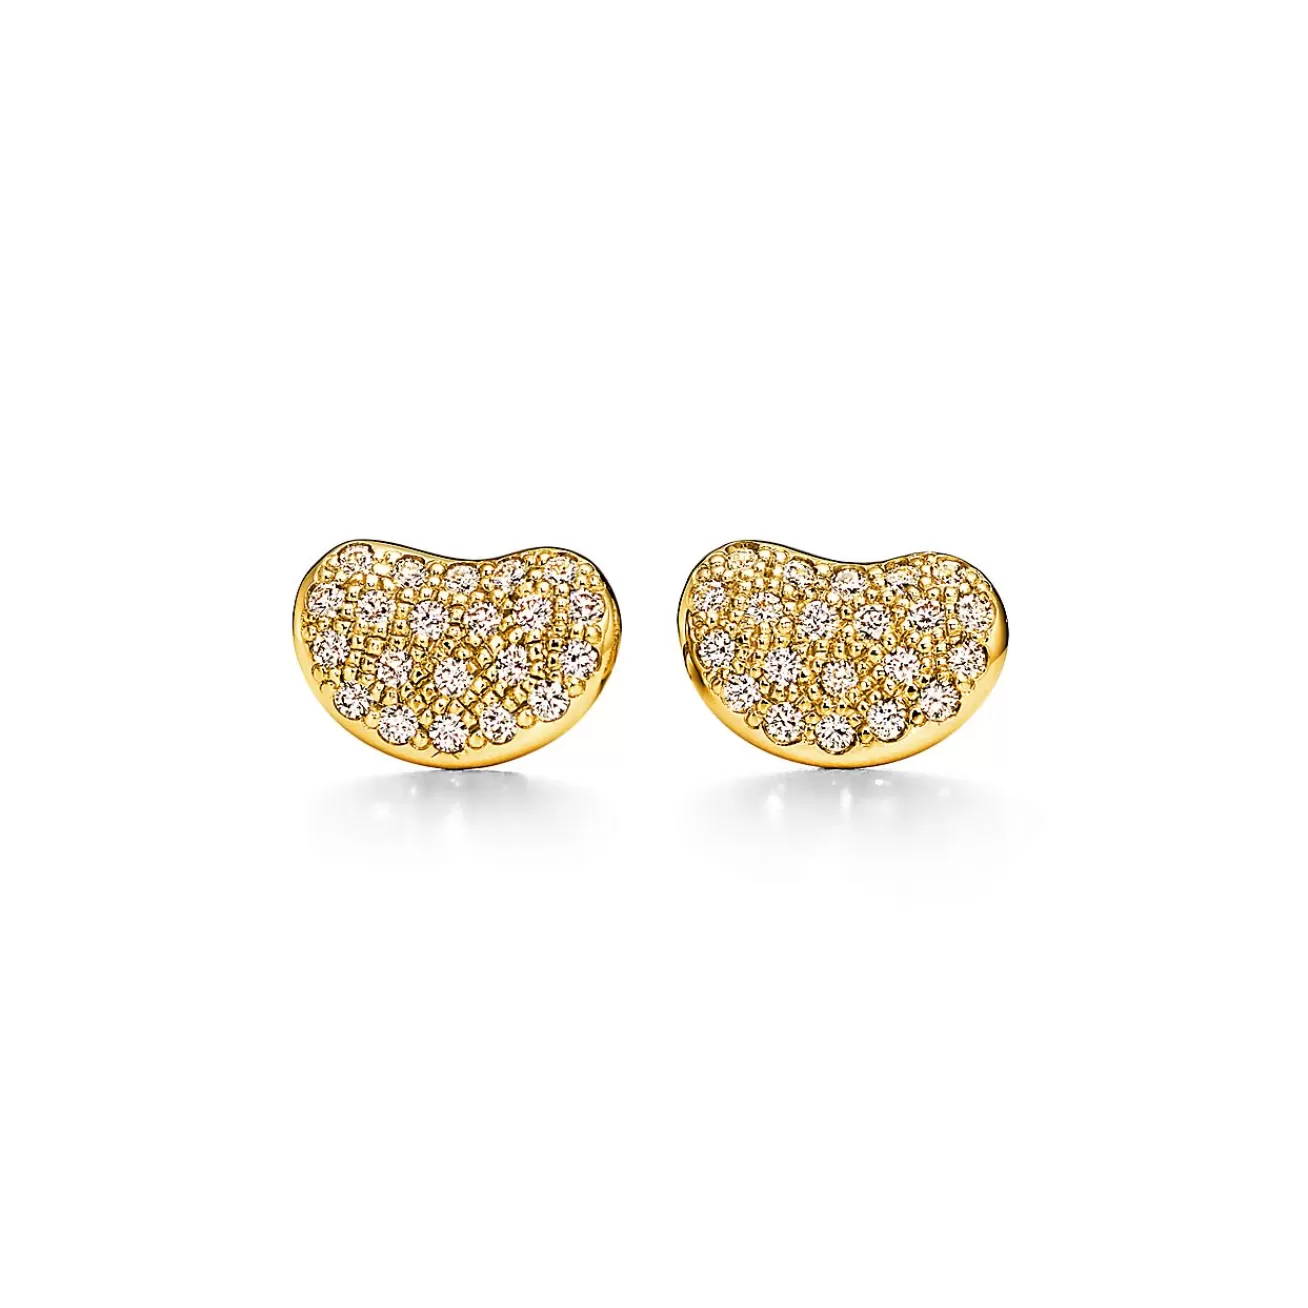 Tiffany & Co. Elsa Peretti® Bean® design Earrings in Yellow Gold with Pavé Diamonds, 9 mm | ^ Earrings | Gold Jewelry